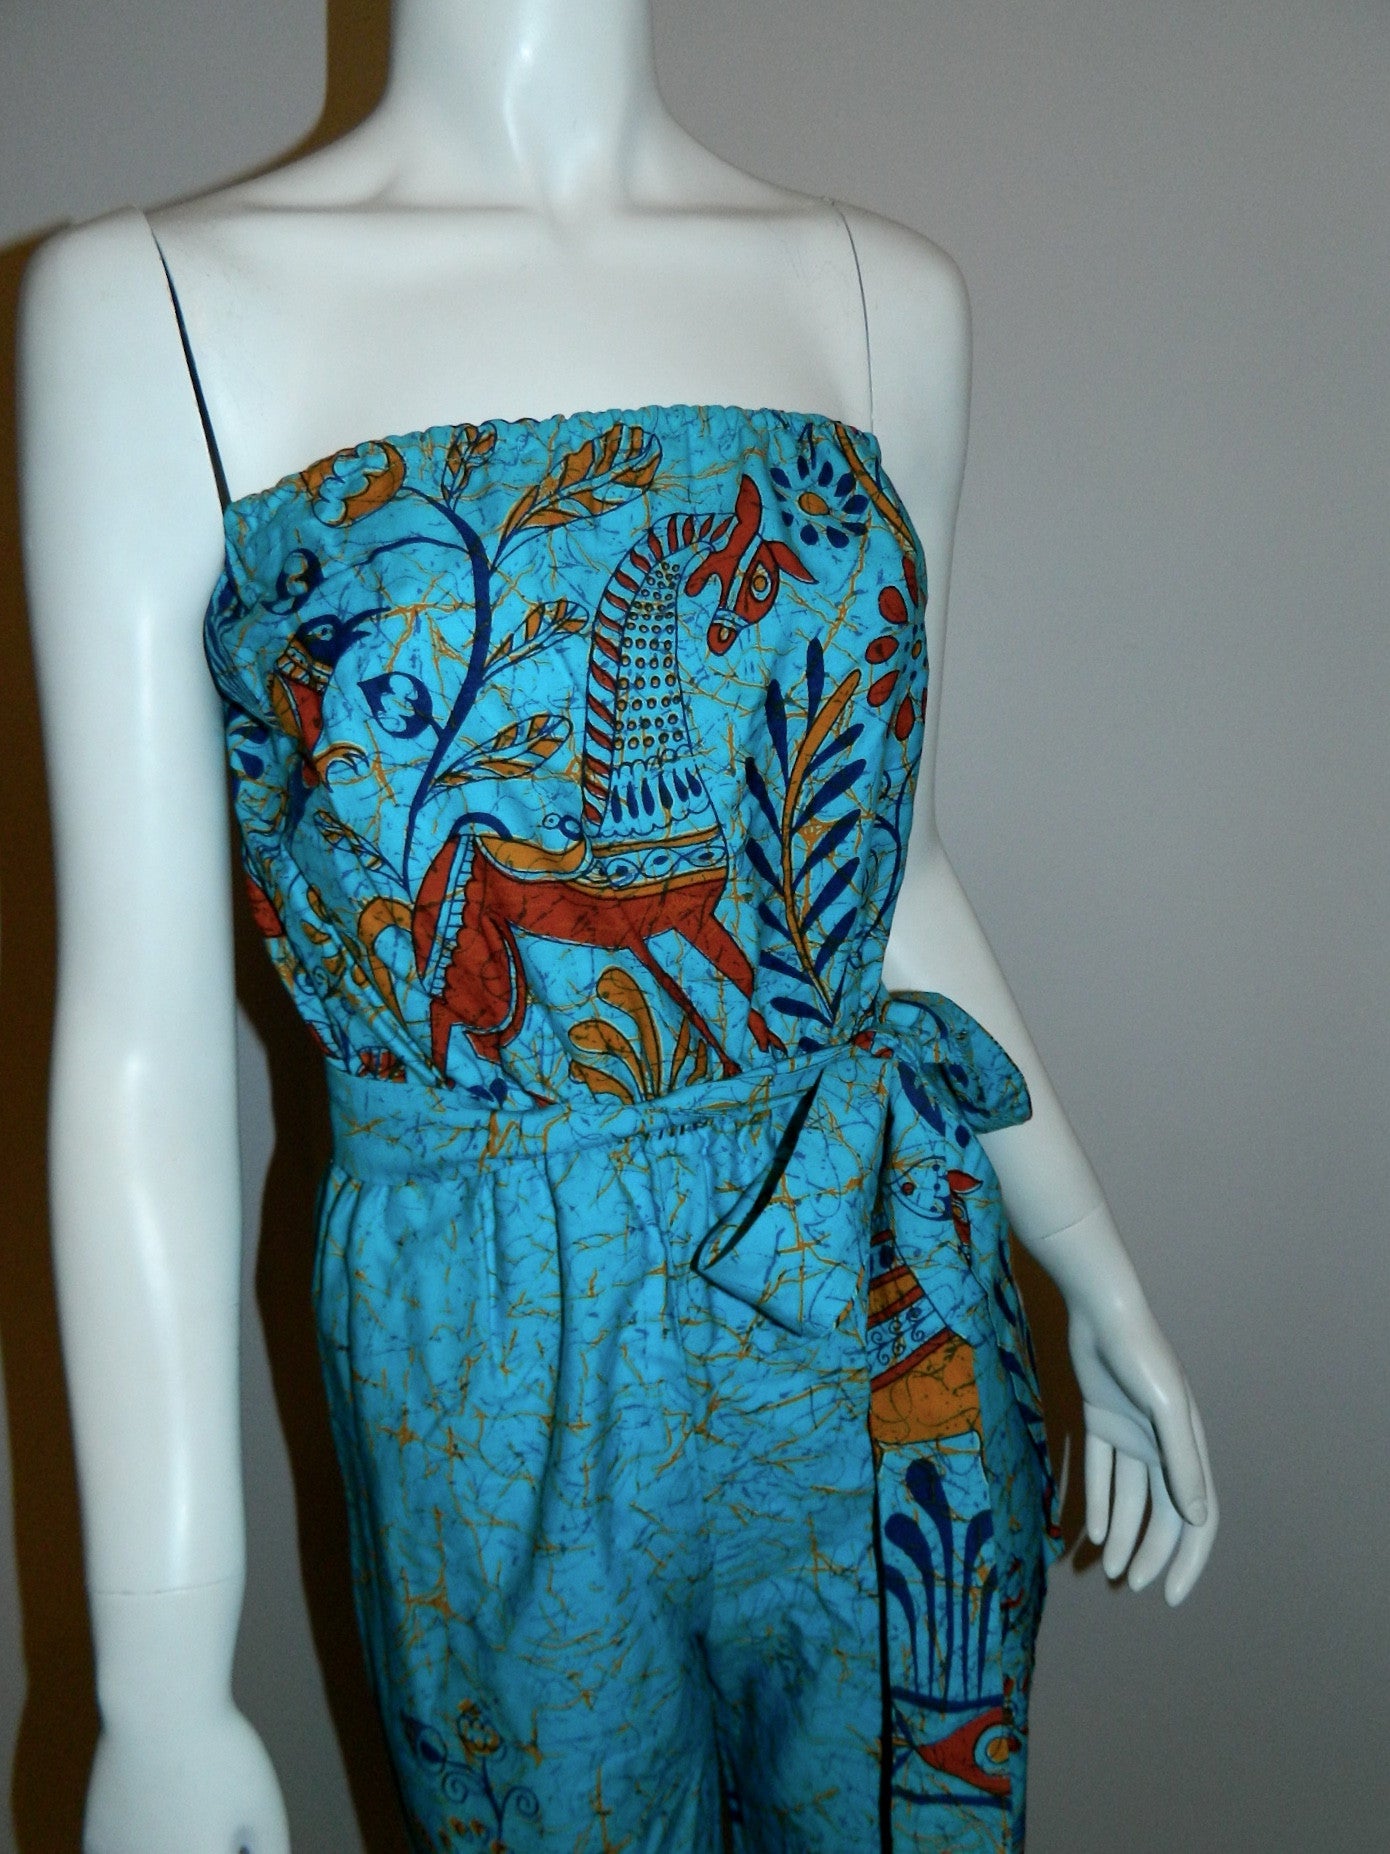 vintage BATIK jumpsuit / strapless romper / aqua blue bird print XS - S by Telas Escalera